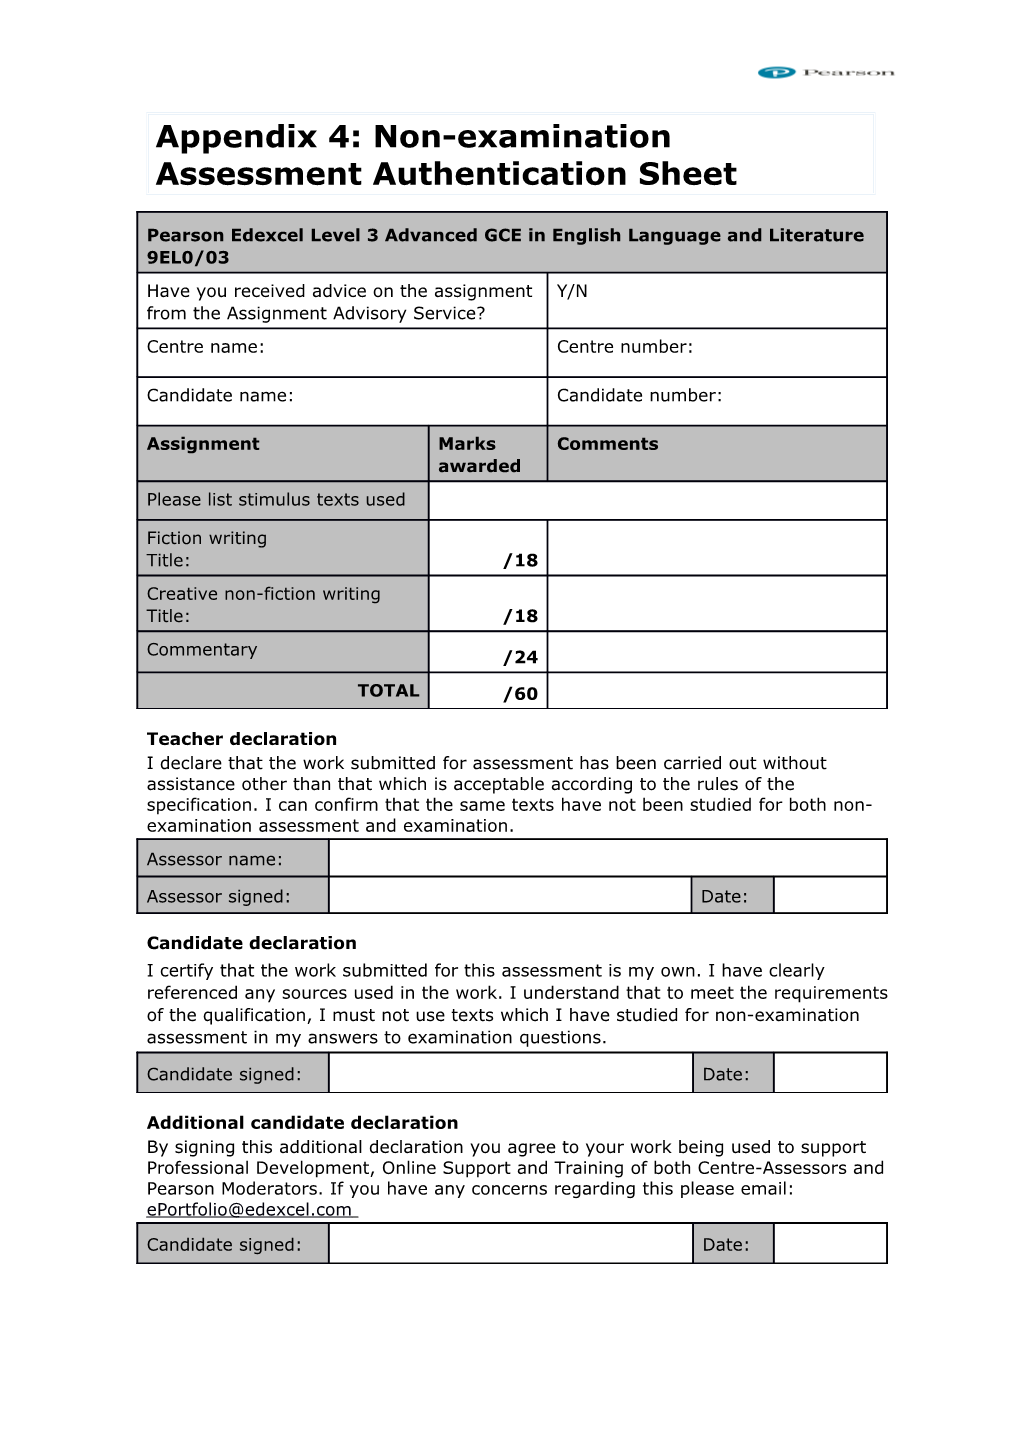 Appendix 4: Non-Examination Assessment Authentication Sheet